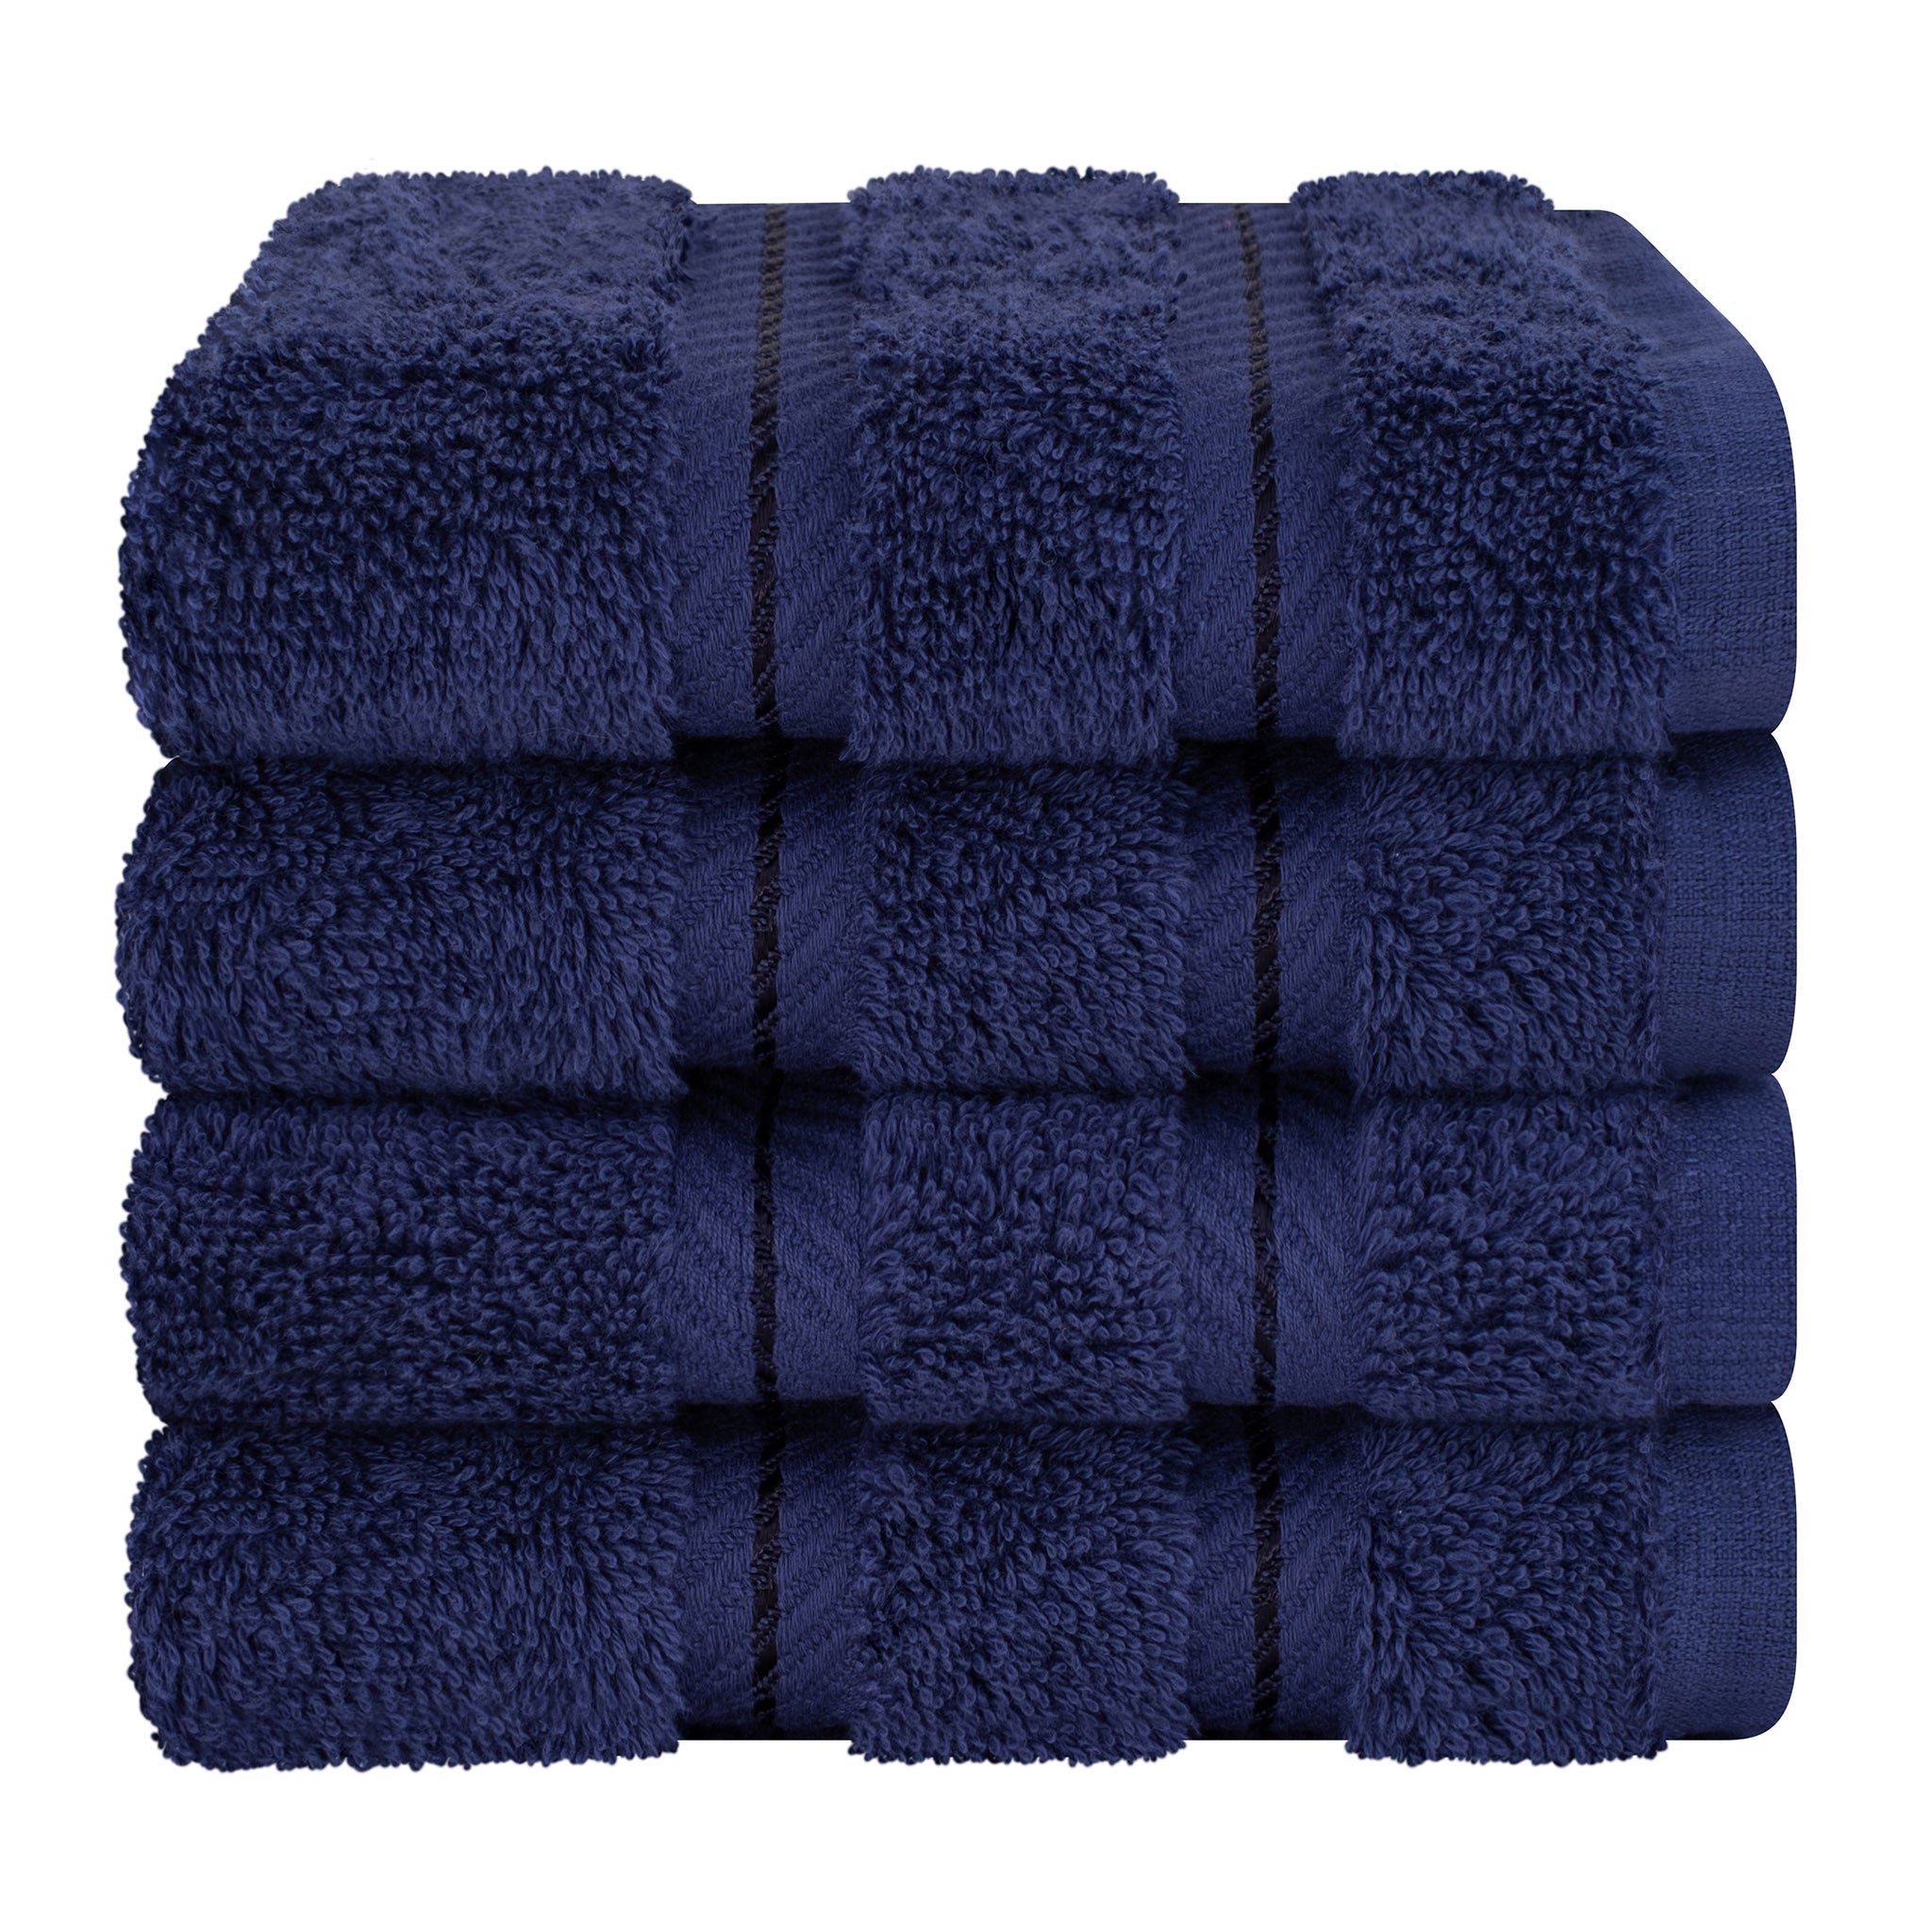  American Soft Linen 100% Turkish Cotton 4 Piece Washcloth Set - Wholesale - navy-blue-7